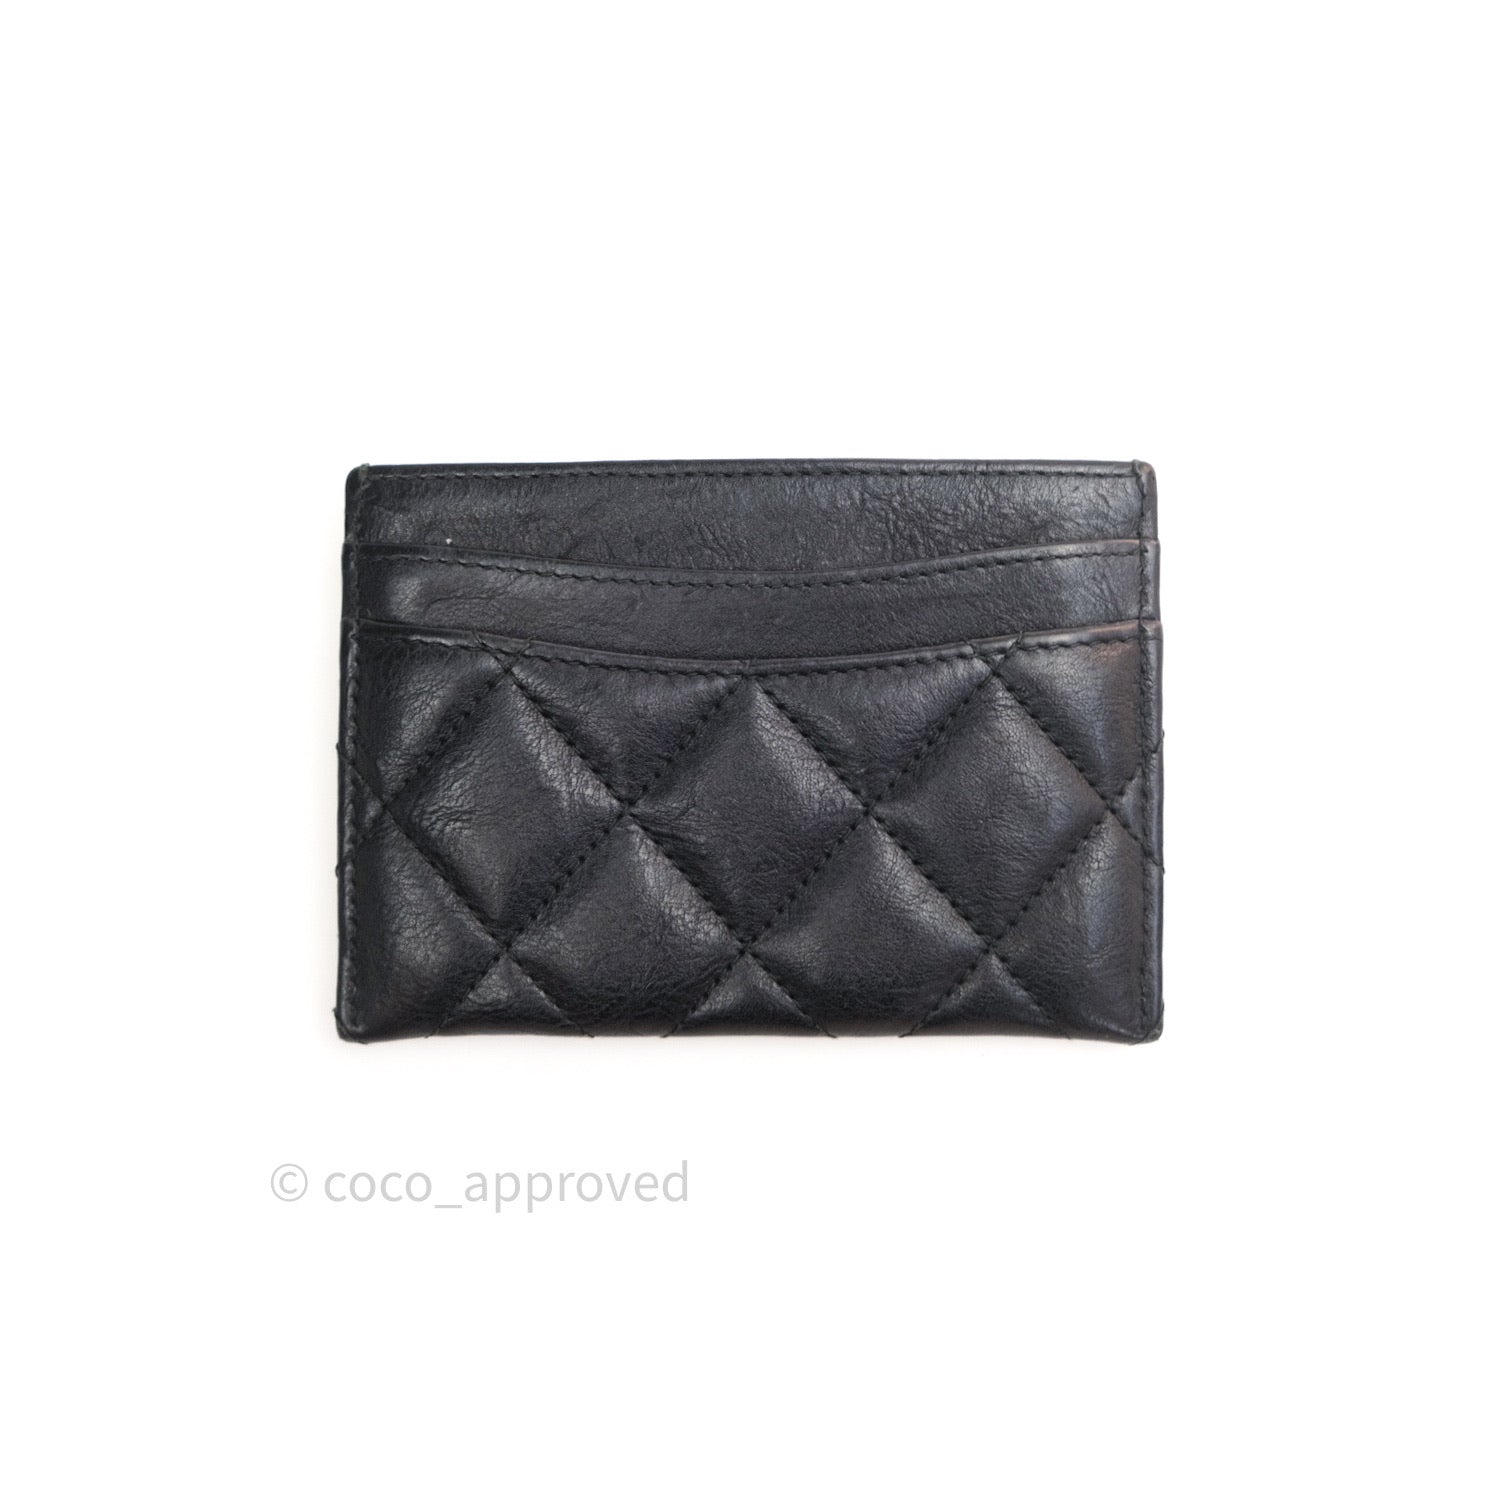 Classic Long Flap Chanel Wallet - Gem